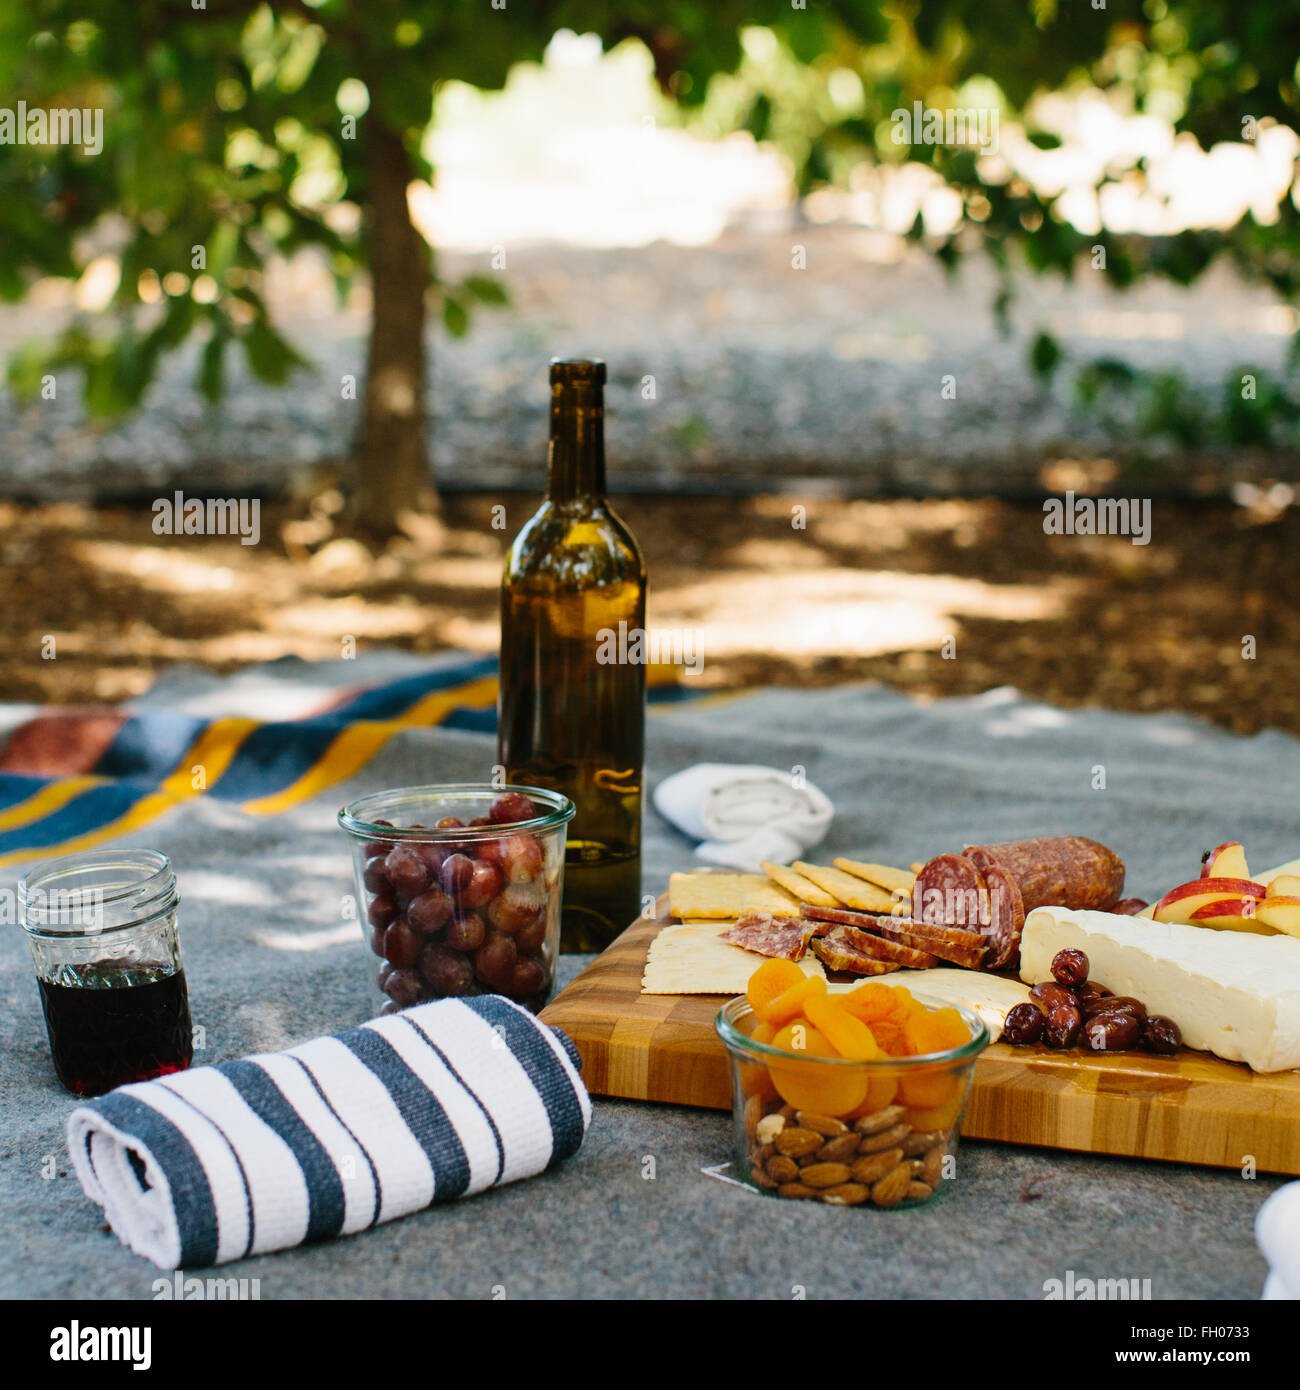 A picnic in California's central coast wine country, Santa Ynez. Stock Photo